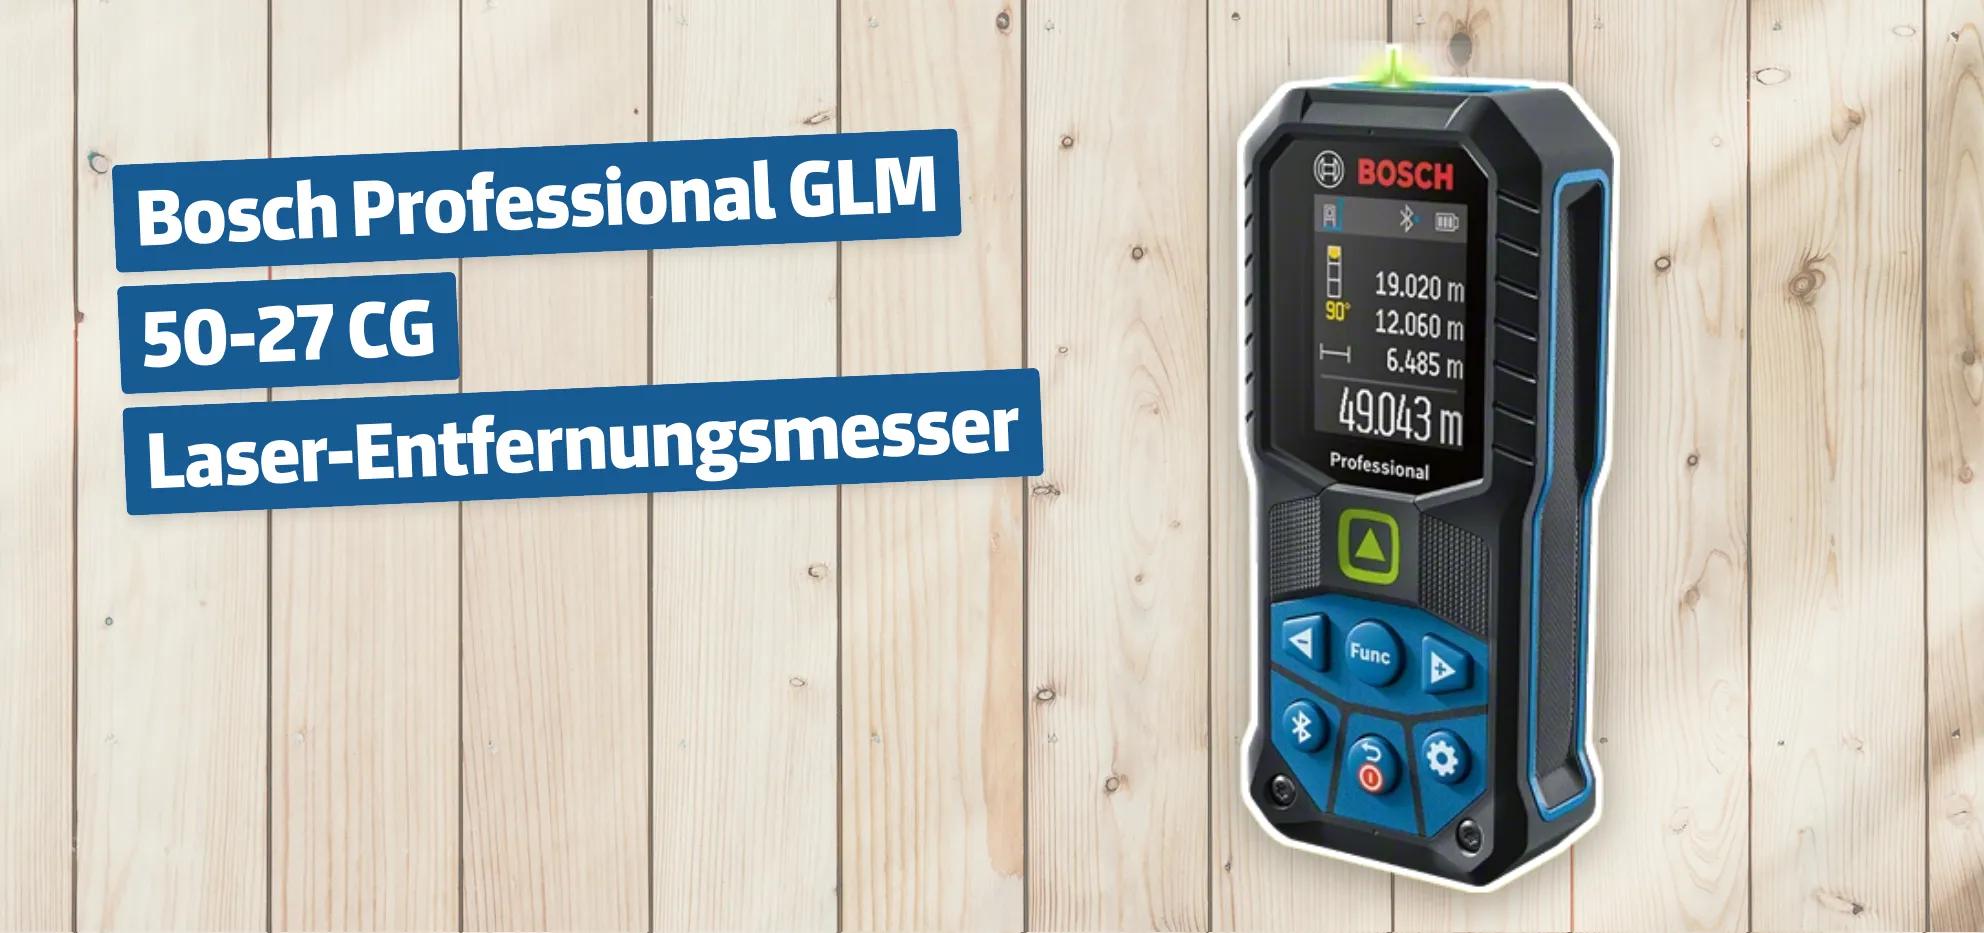 Bosch Professional GLM 50-27 CG Laser-Entfernungsmesser